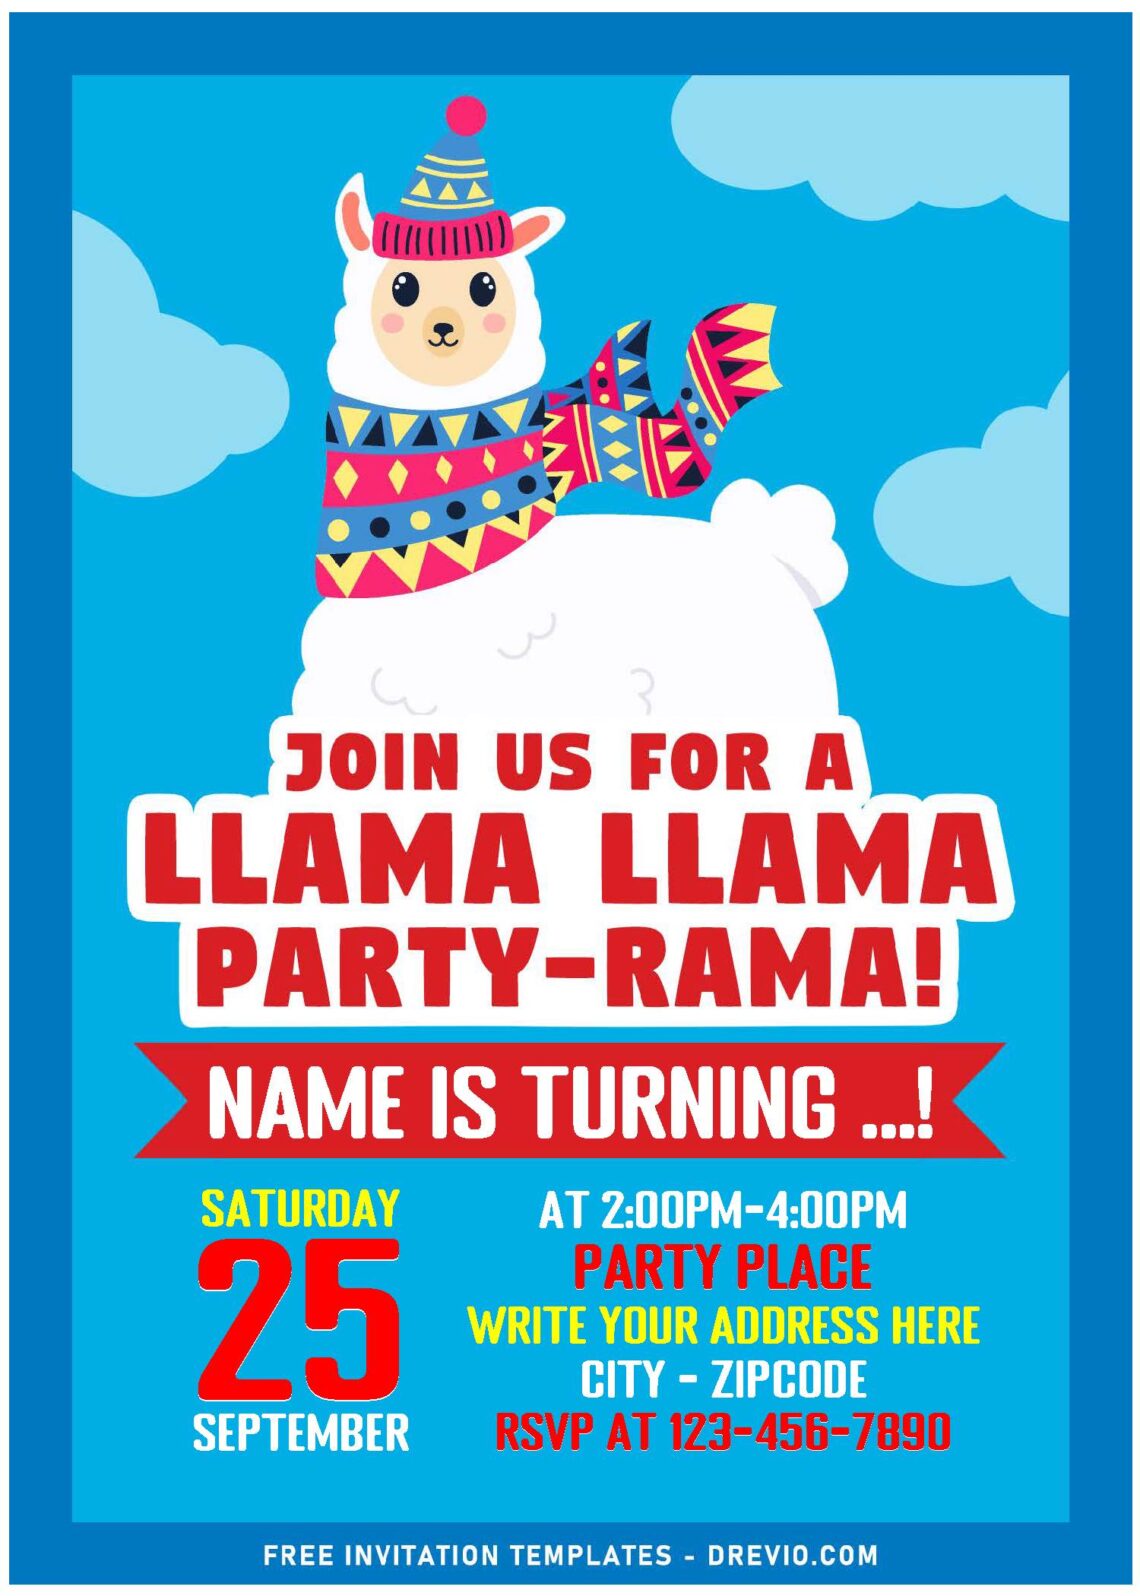 (Free Editable PDF) Lovely Llama Party-Rama Birthday Invitation Templates with cute Llama scarf